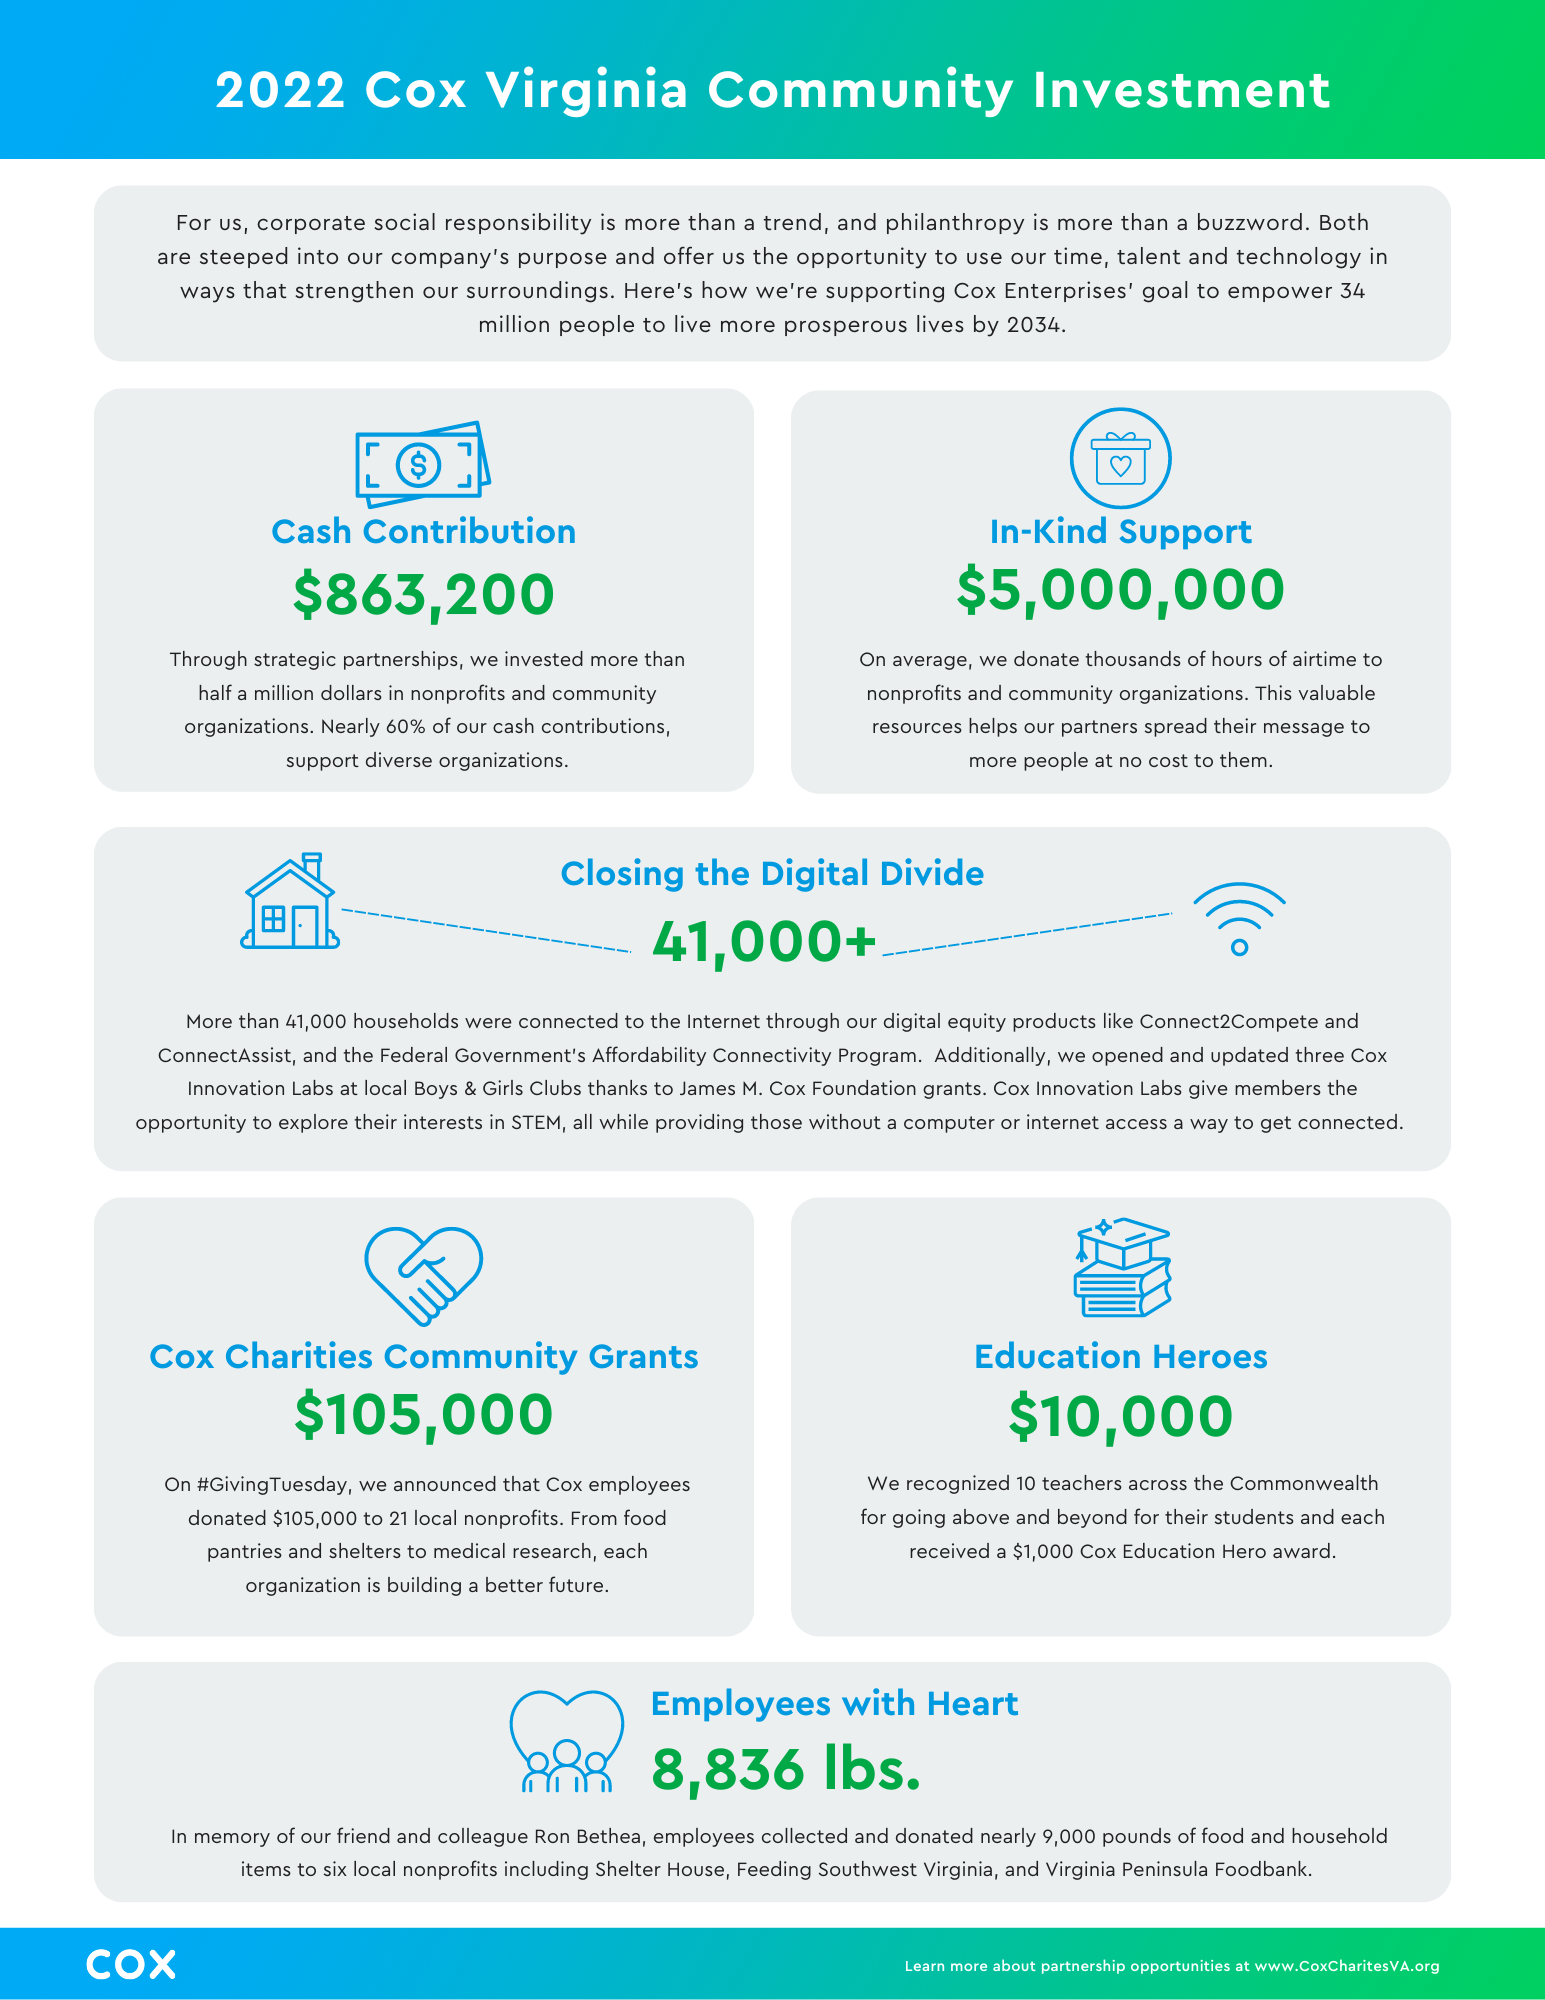 2022 Cox Virginia Community Investment Infographic